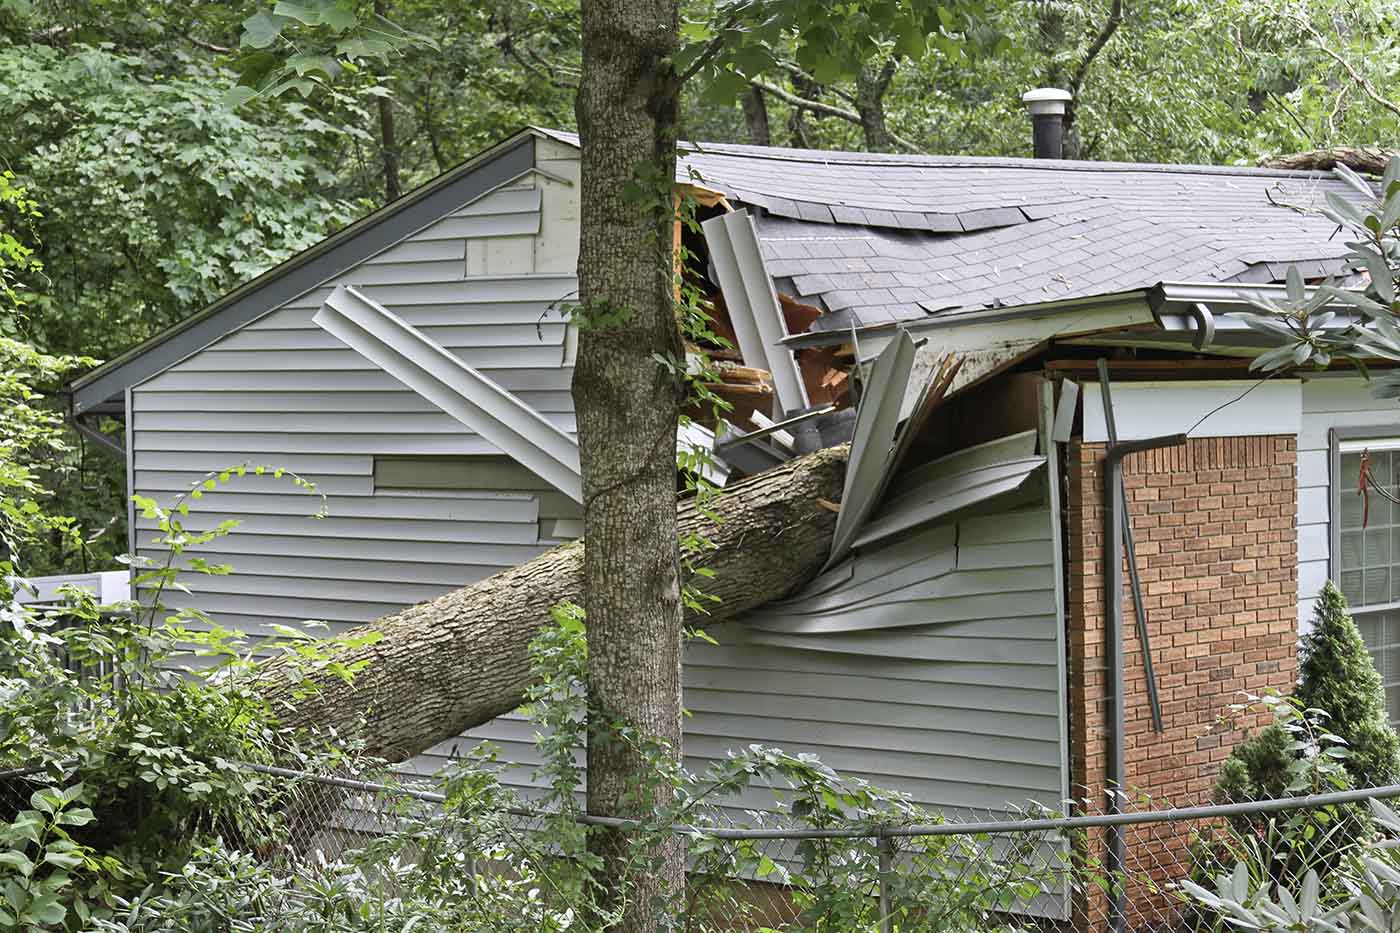 Insurance Claims Adjuster19076 Prospect Park Roof Damage & Fallen Trees 19078 Ridley Park 19079 Sharon Hill 19081 Swarthmore theft vandalism